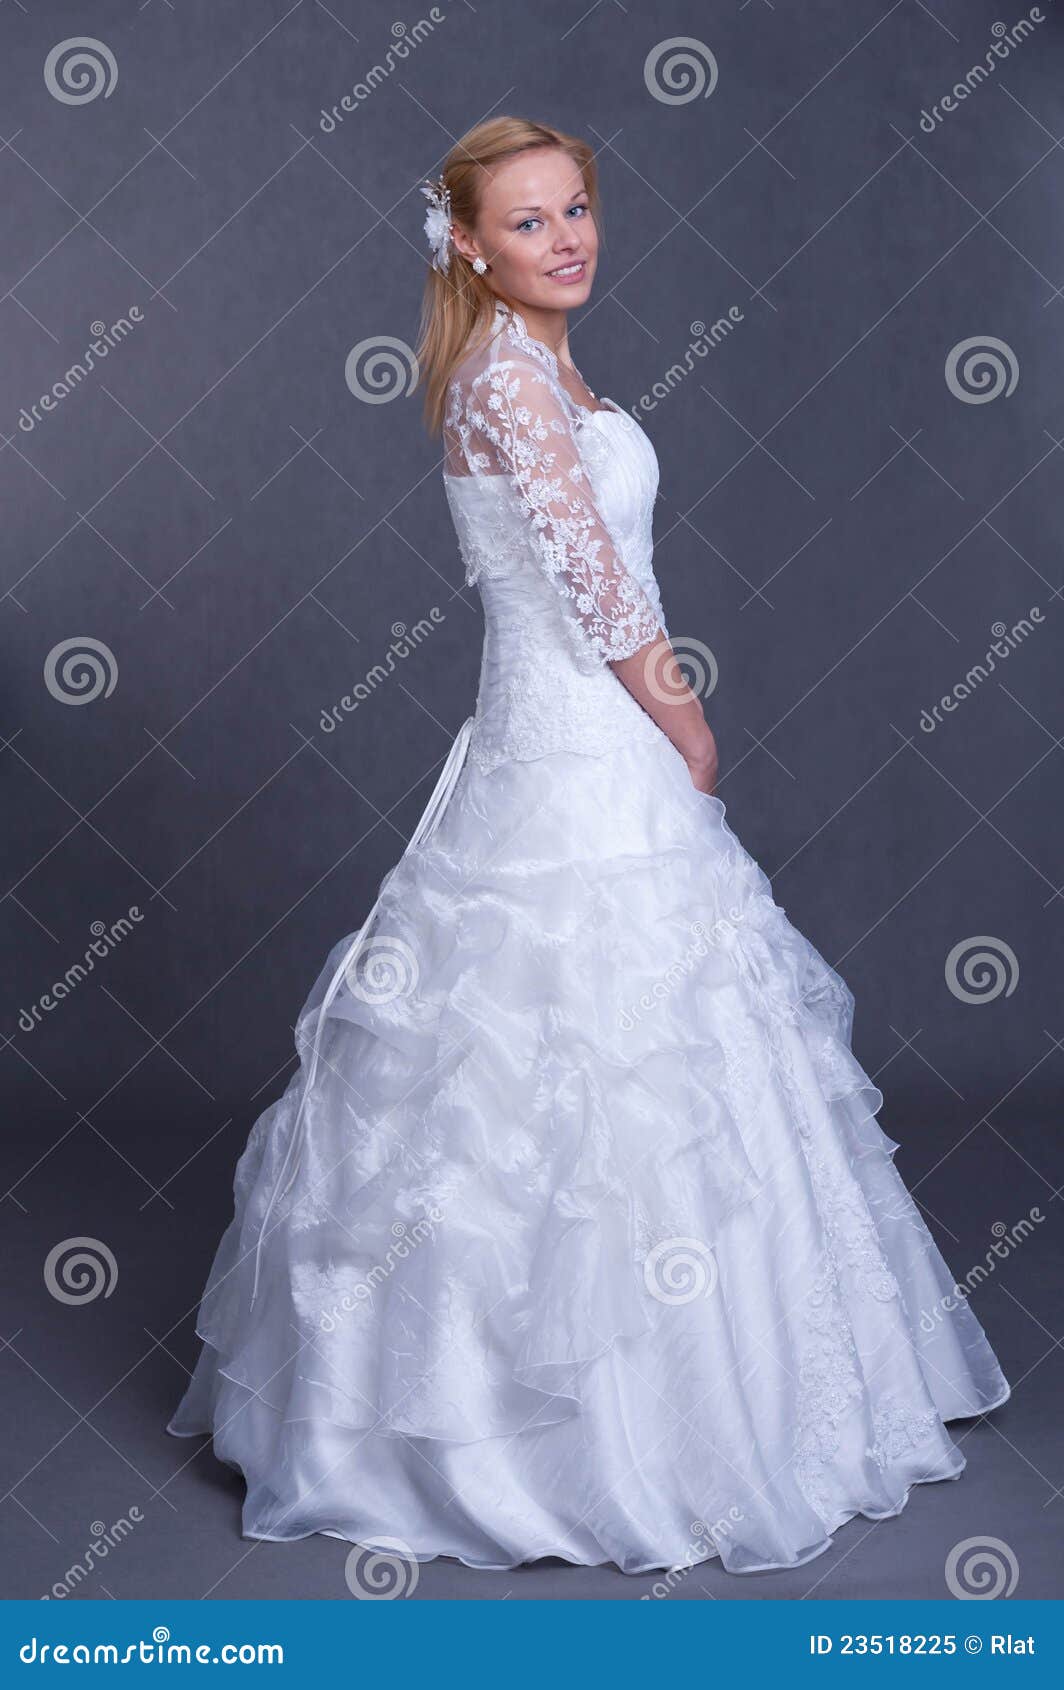 Beautiful girl in wedding dress on grey background - studio shot.